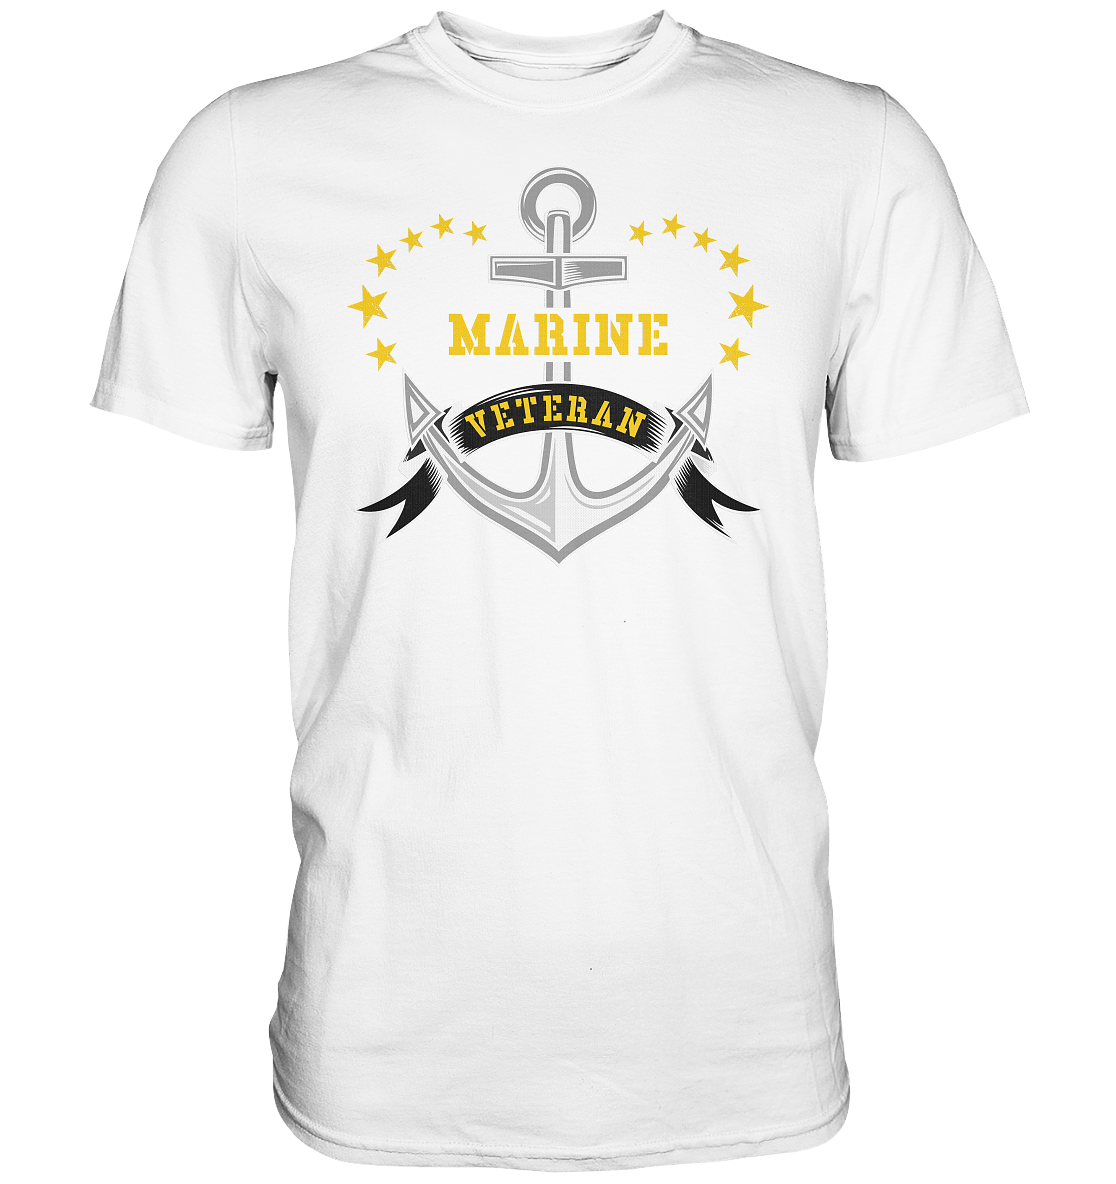 ANKER MARINE VETERAN - Premium Shirt